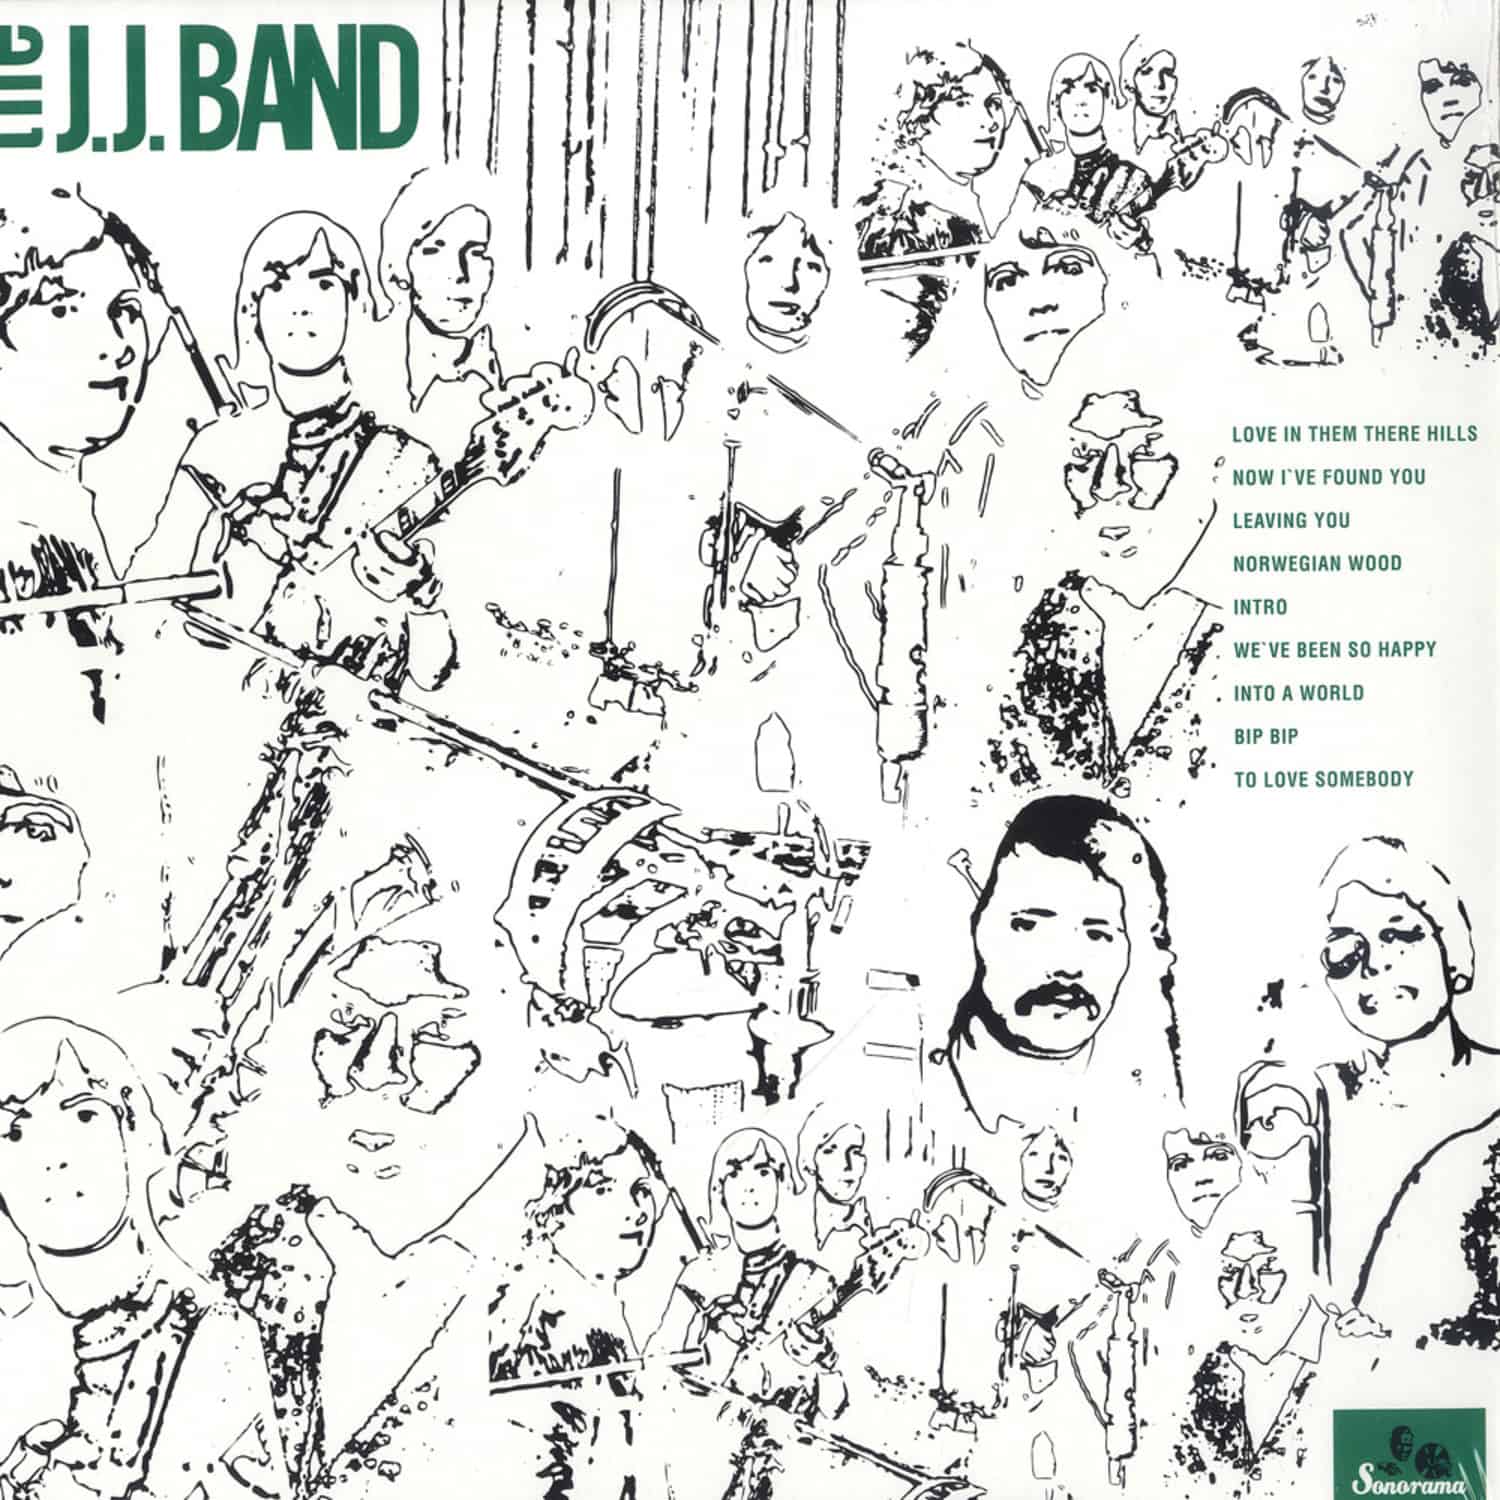 J.J. Band - THE J.J.BAND 